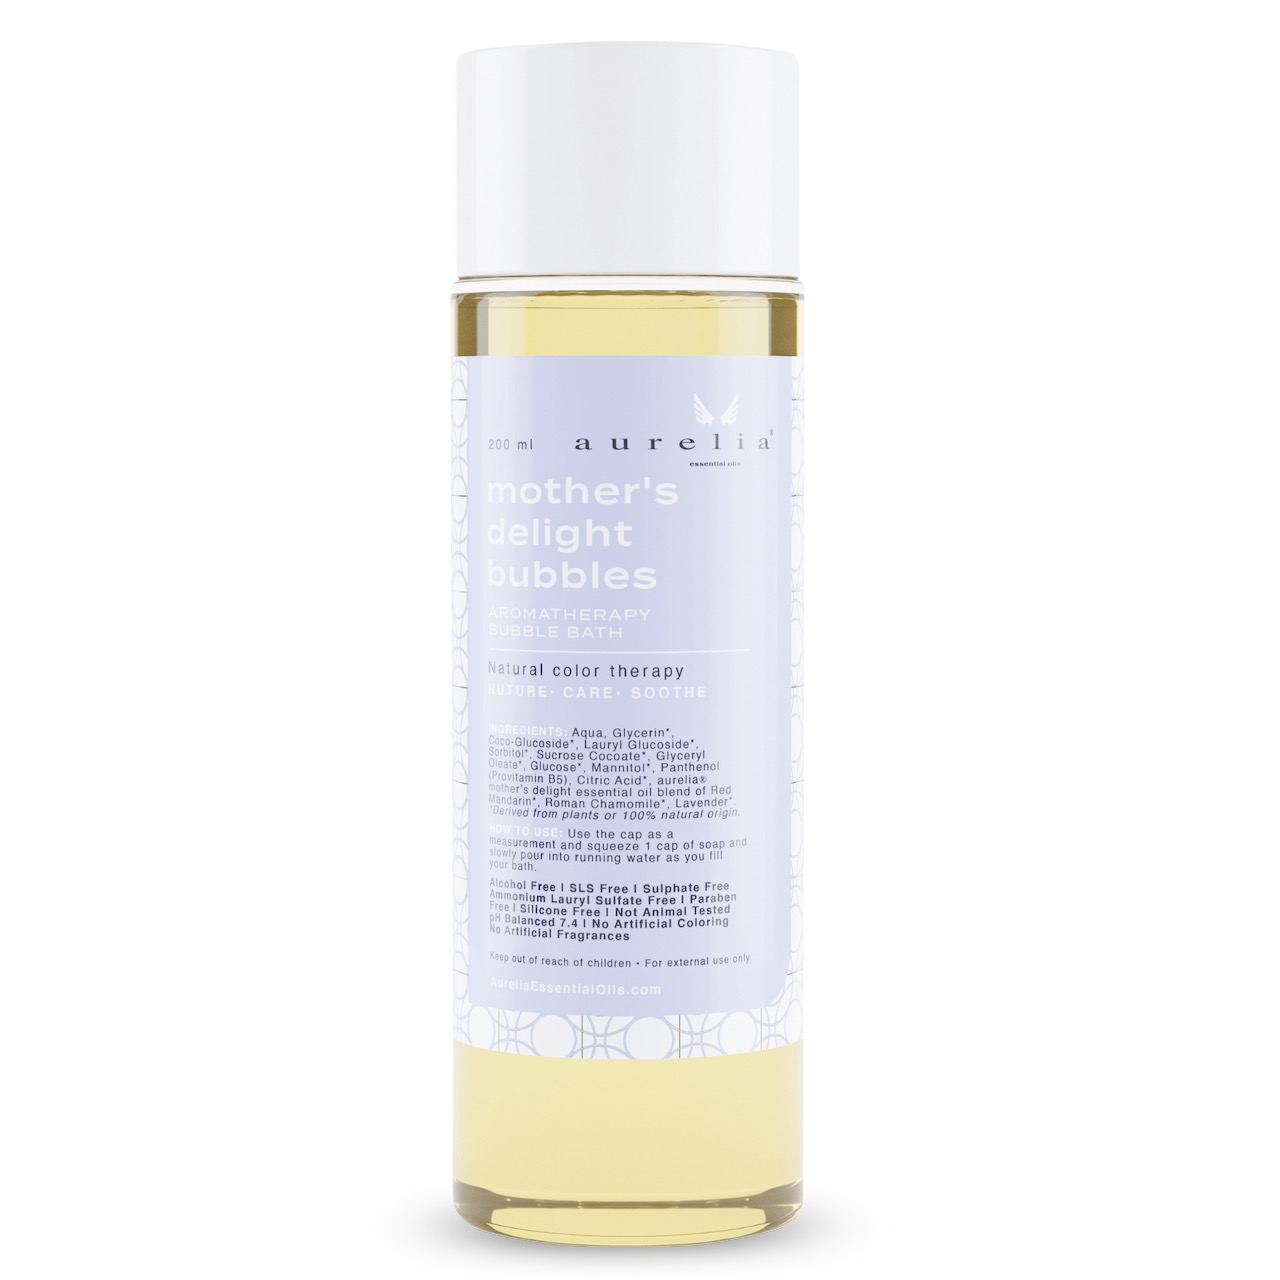 mother's delight bubbles - Schaumbad von aurelia essential oils